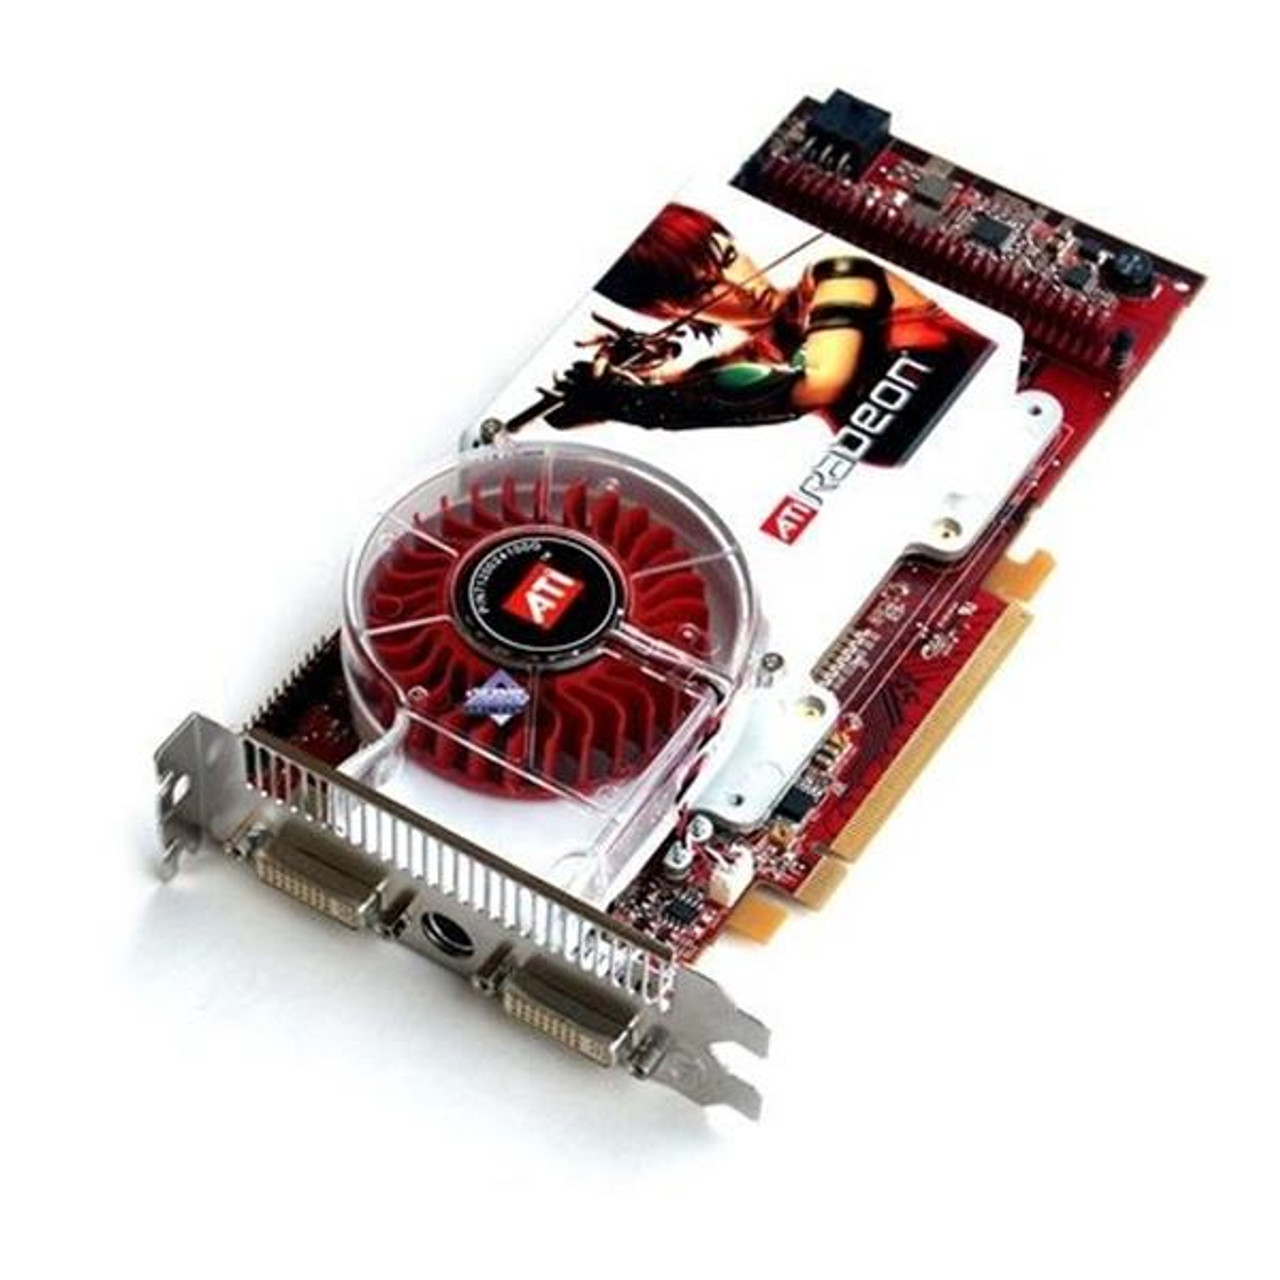 102-A52031-20 - ATI Radeon X1800XL 512MB DDR3 PCI Express Dual DVI VIVO Video Graphics Card